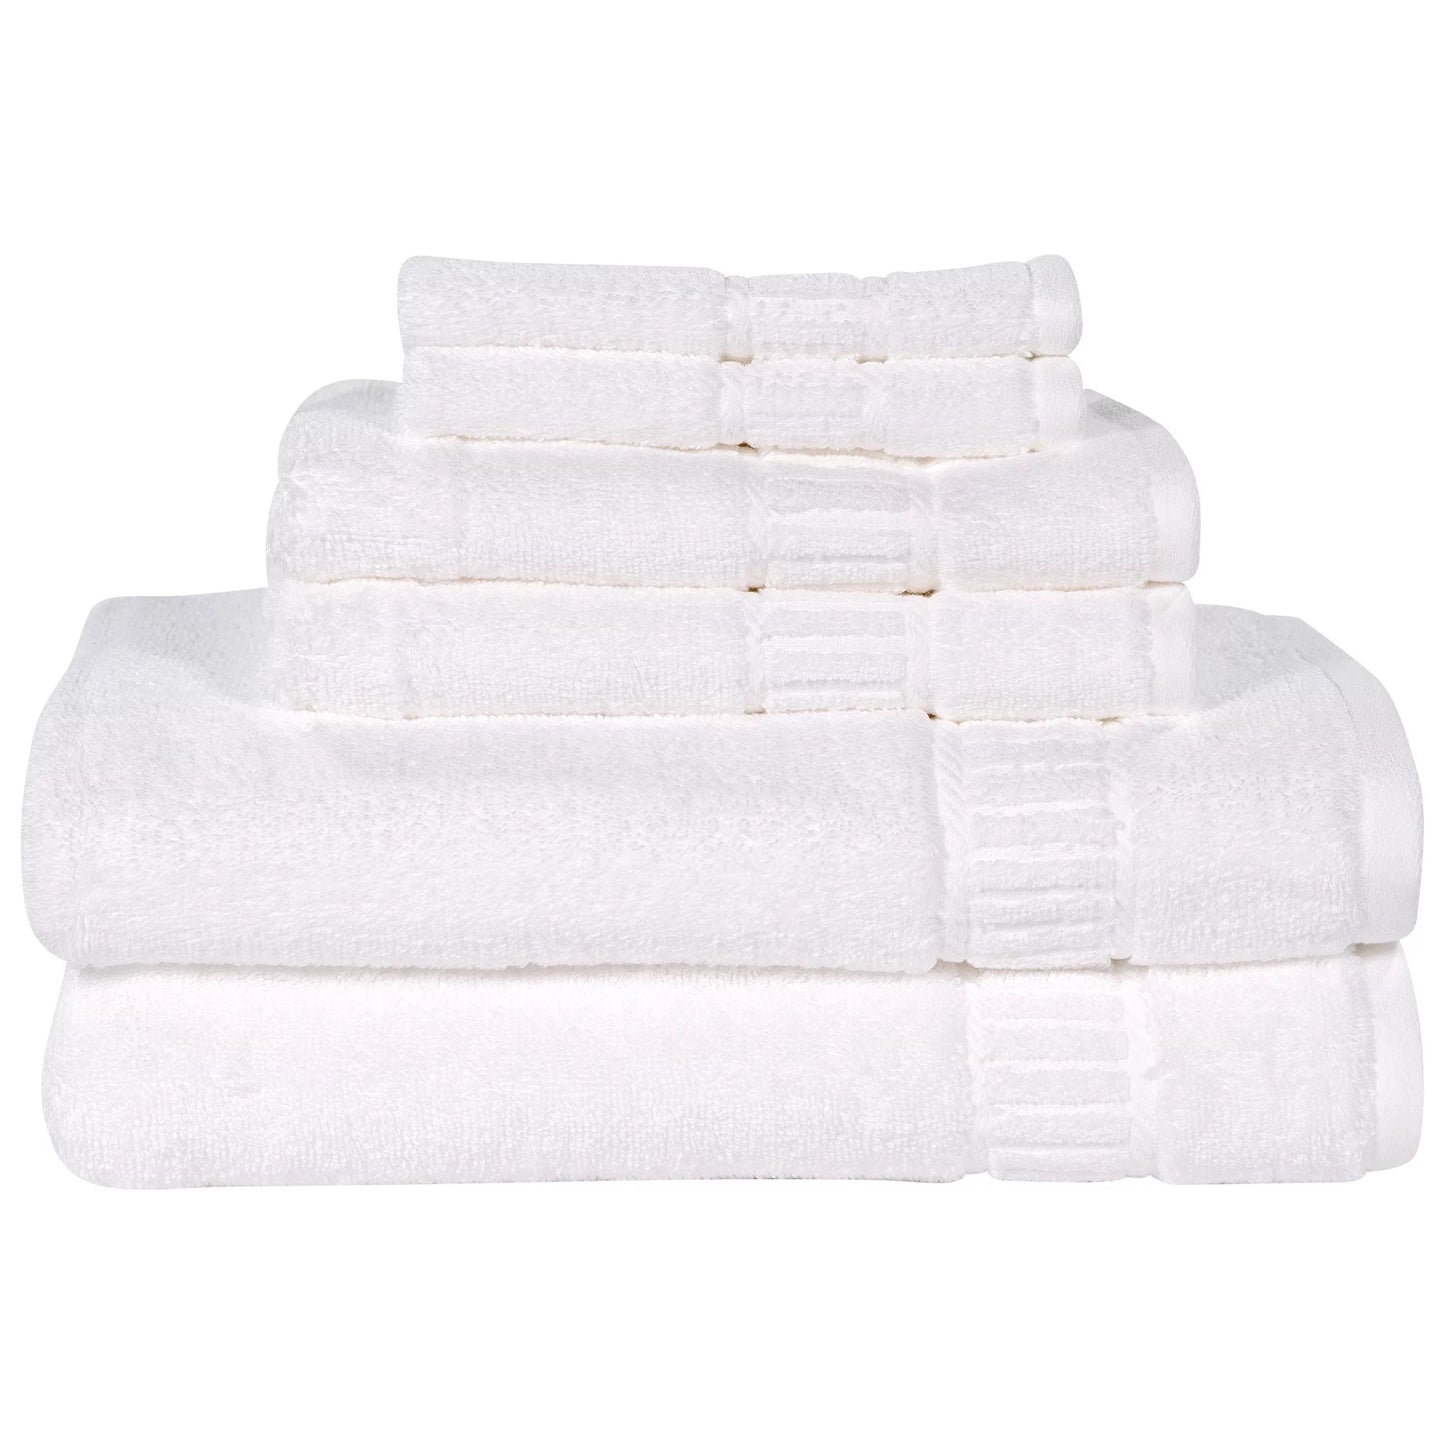 White Towel